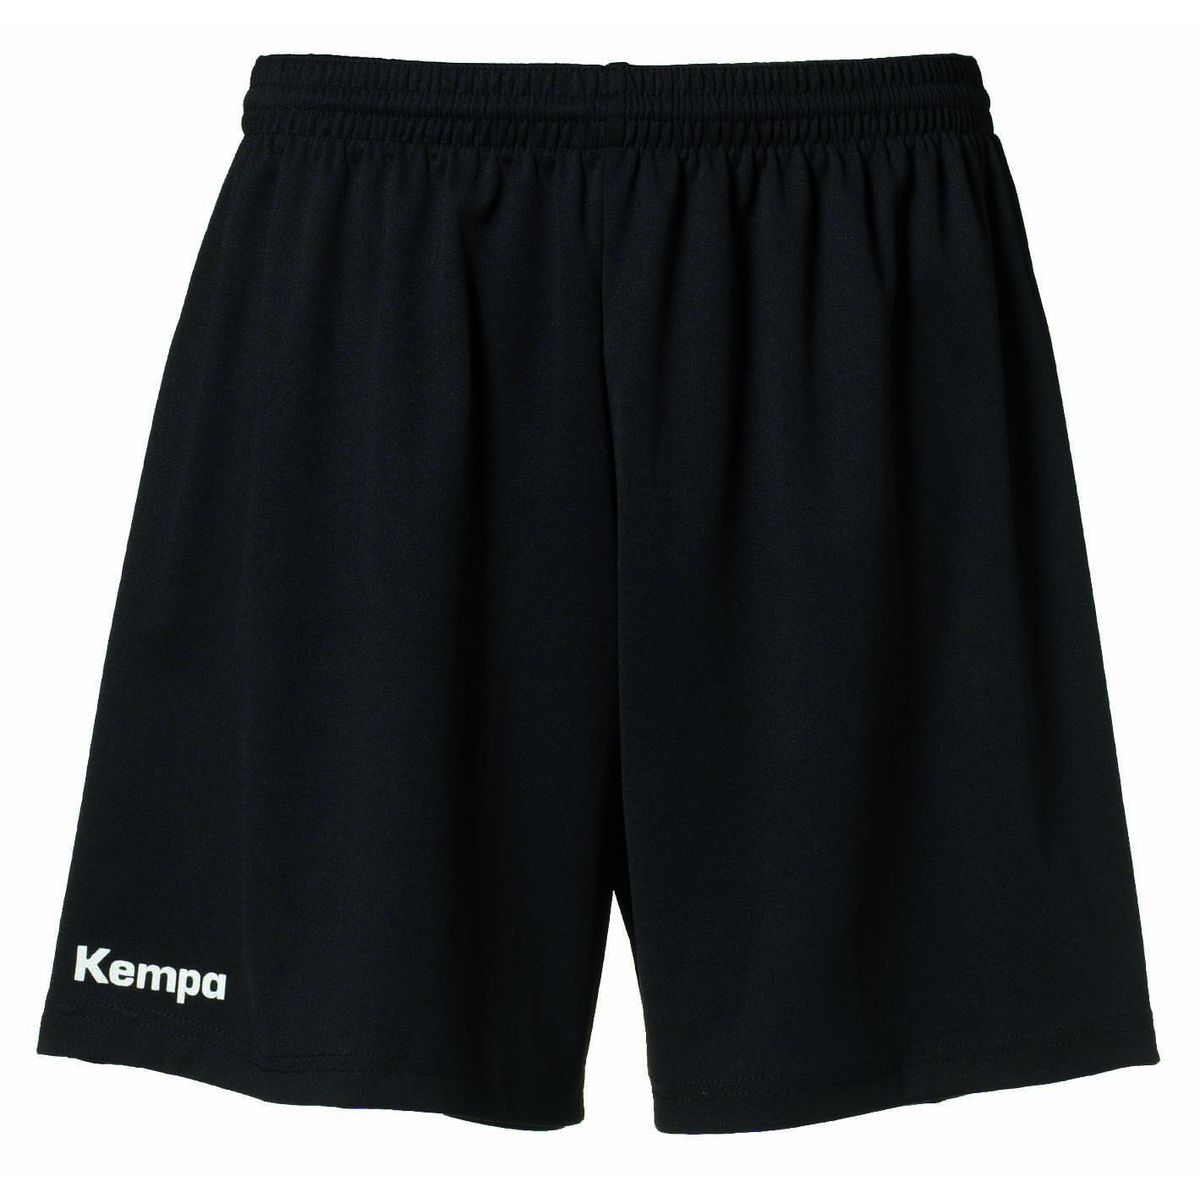 Kempa Classic Kinder Teamhose